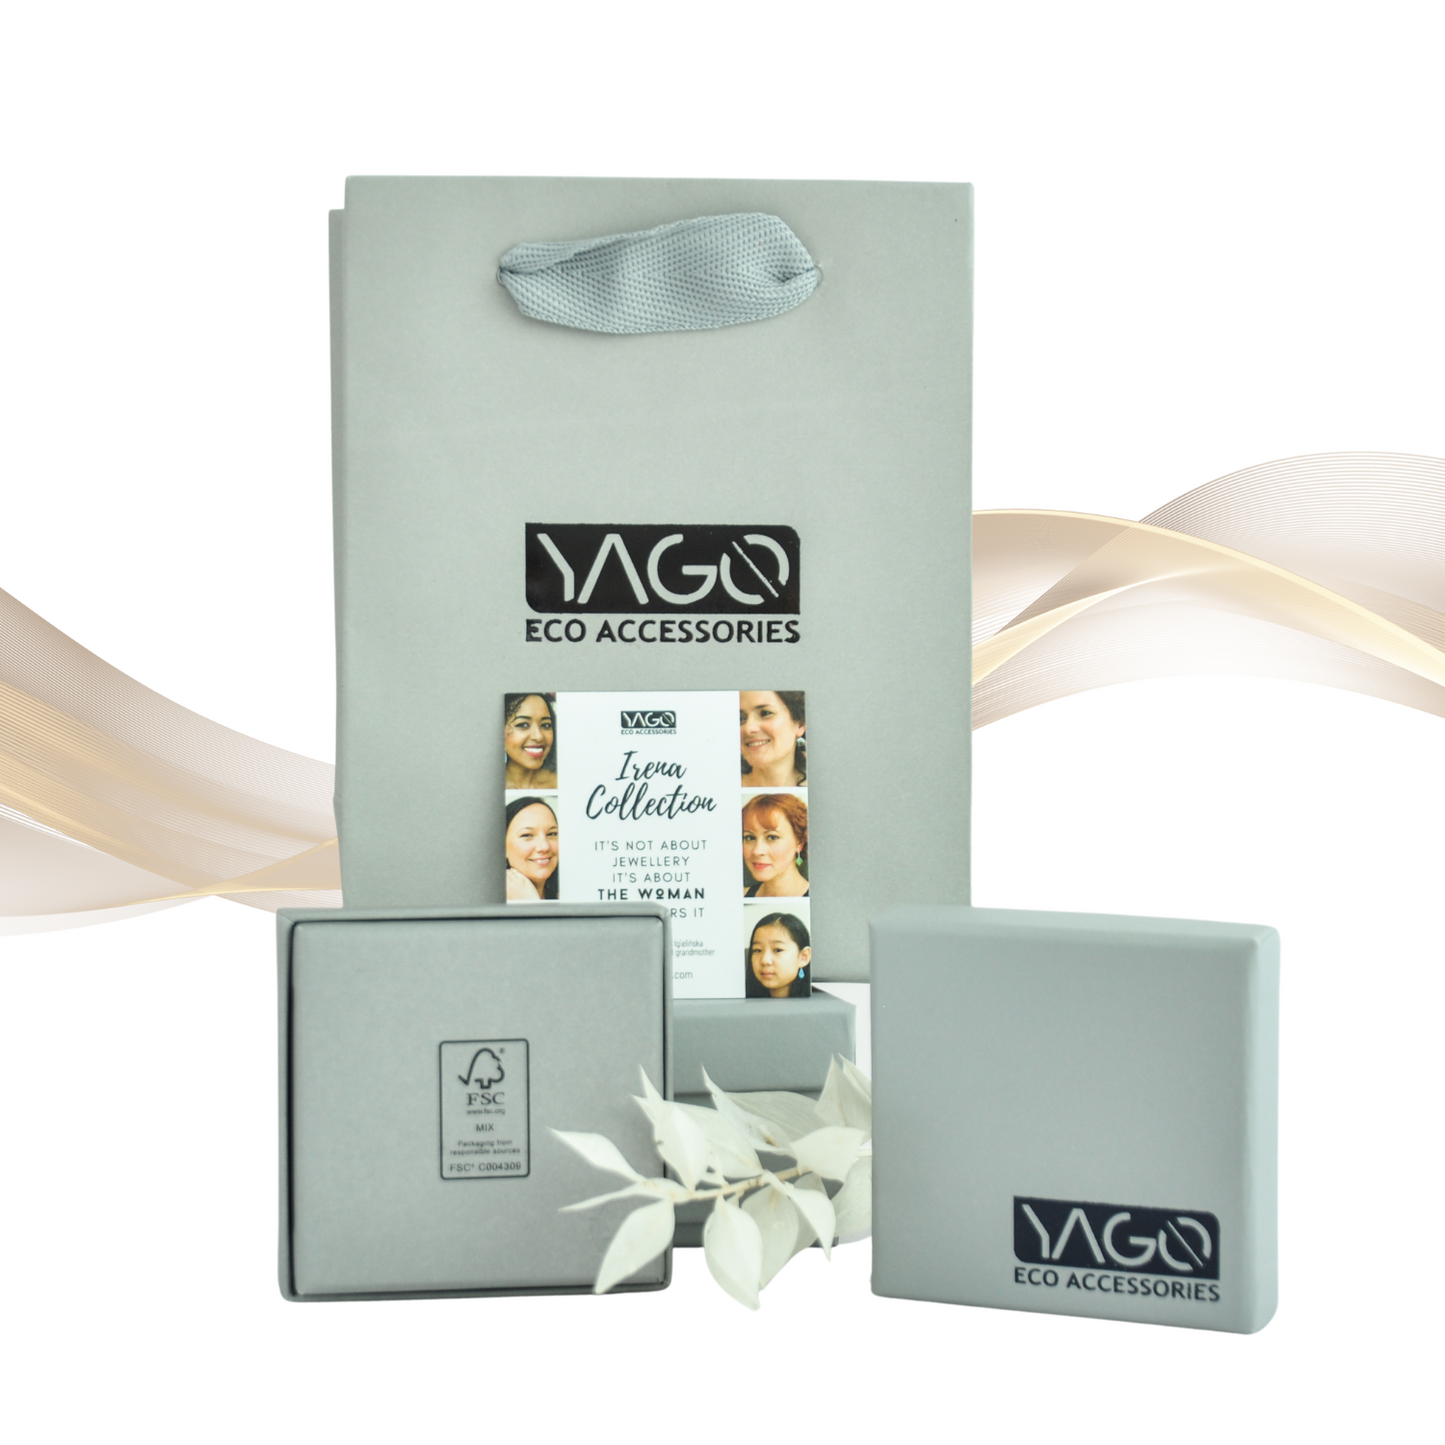 YagoEco sustainable accessories London